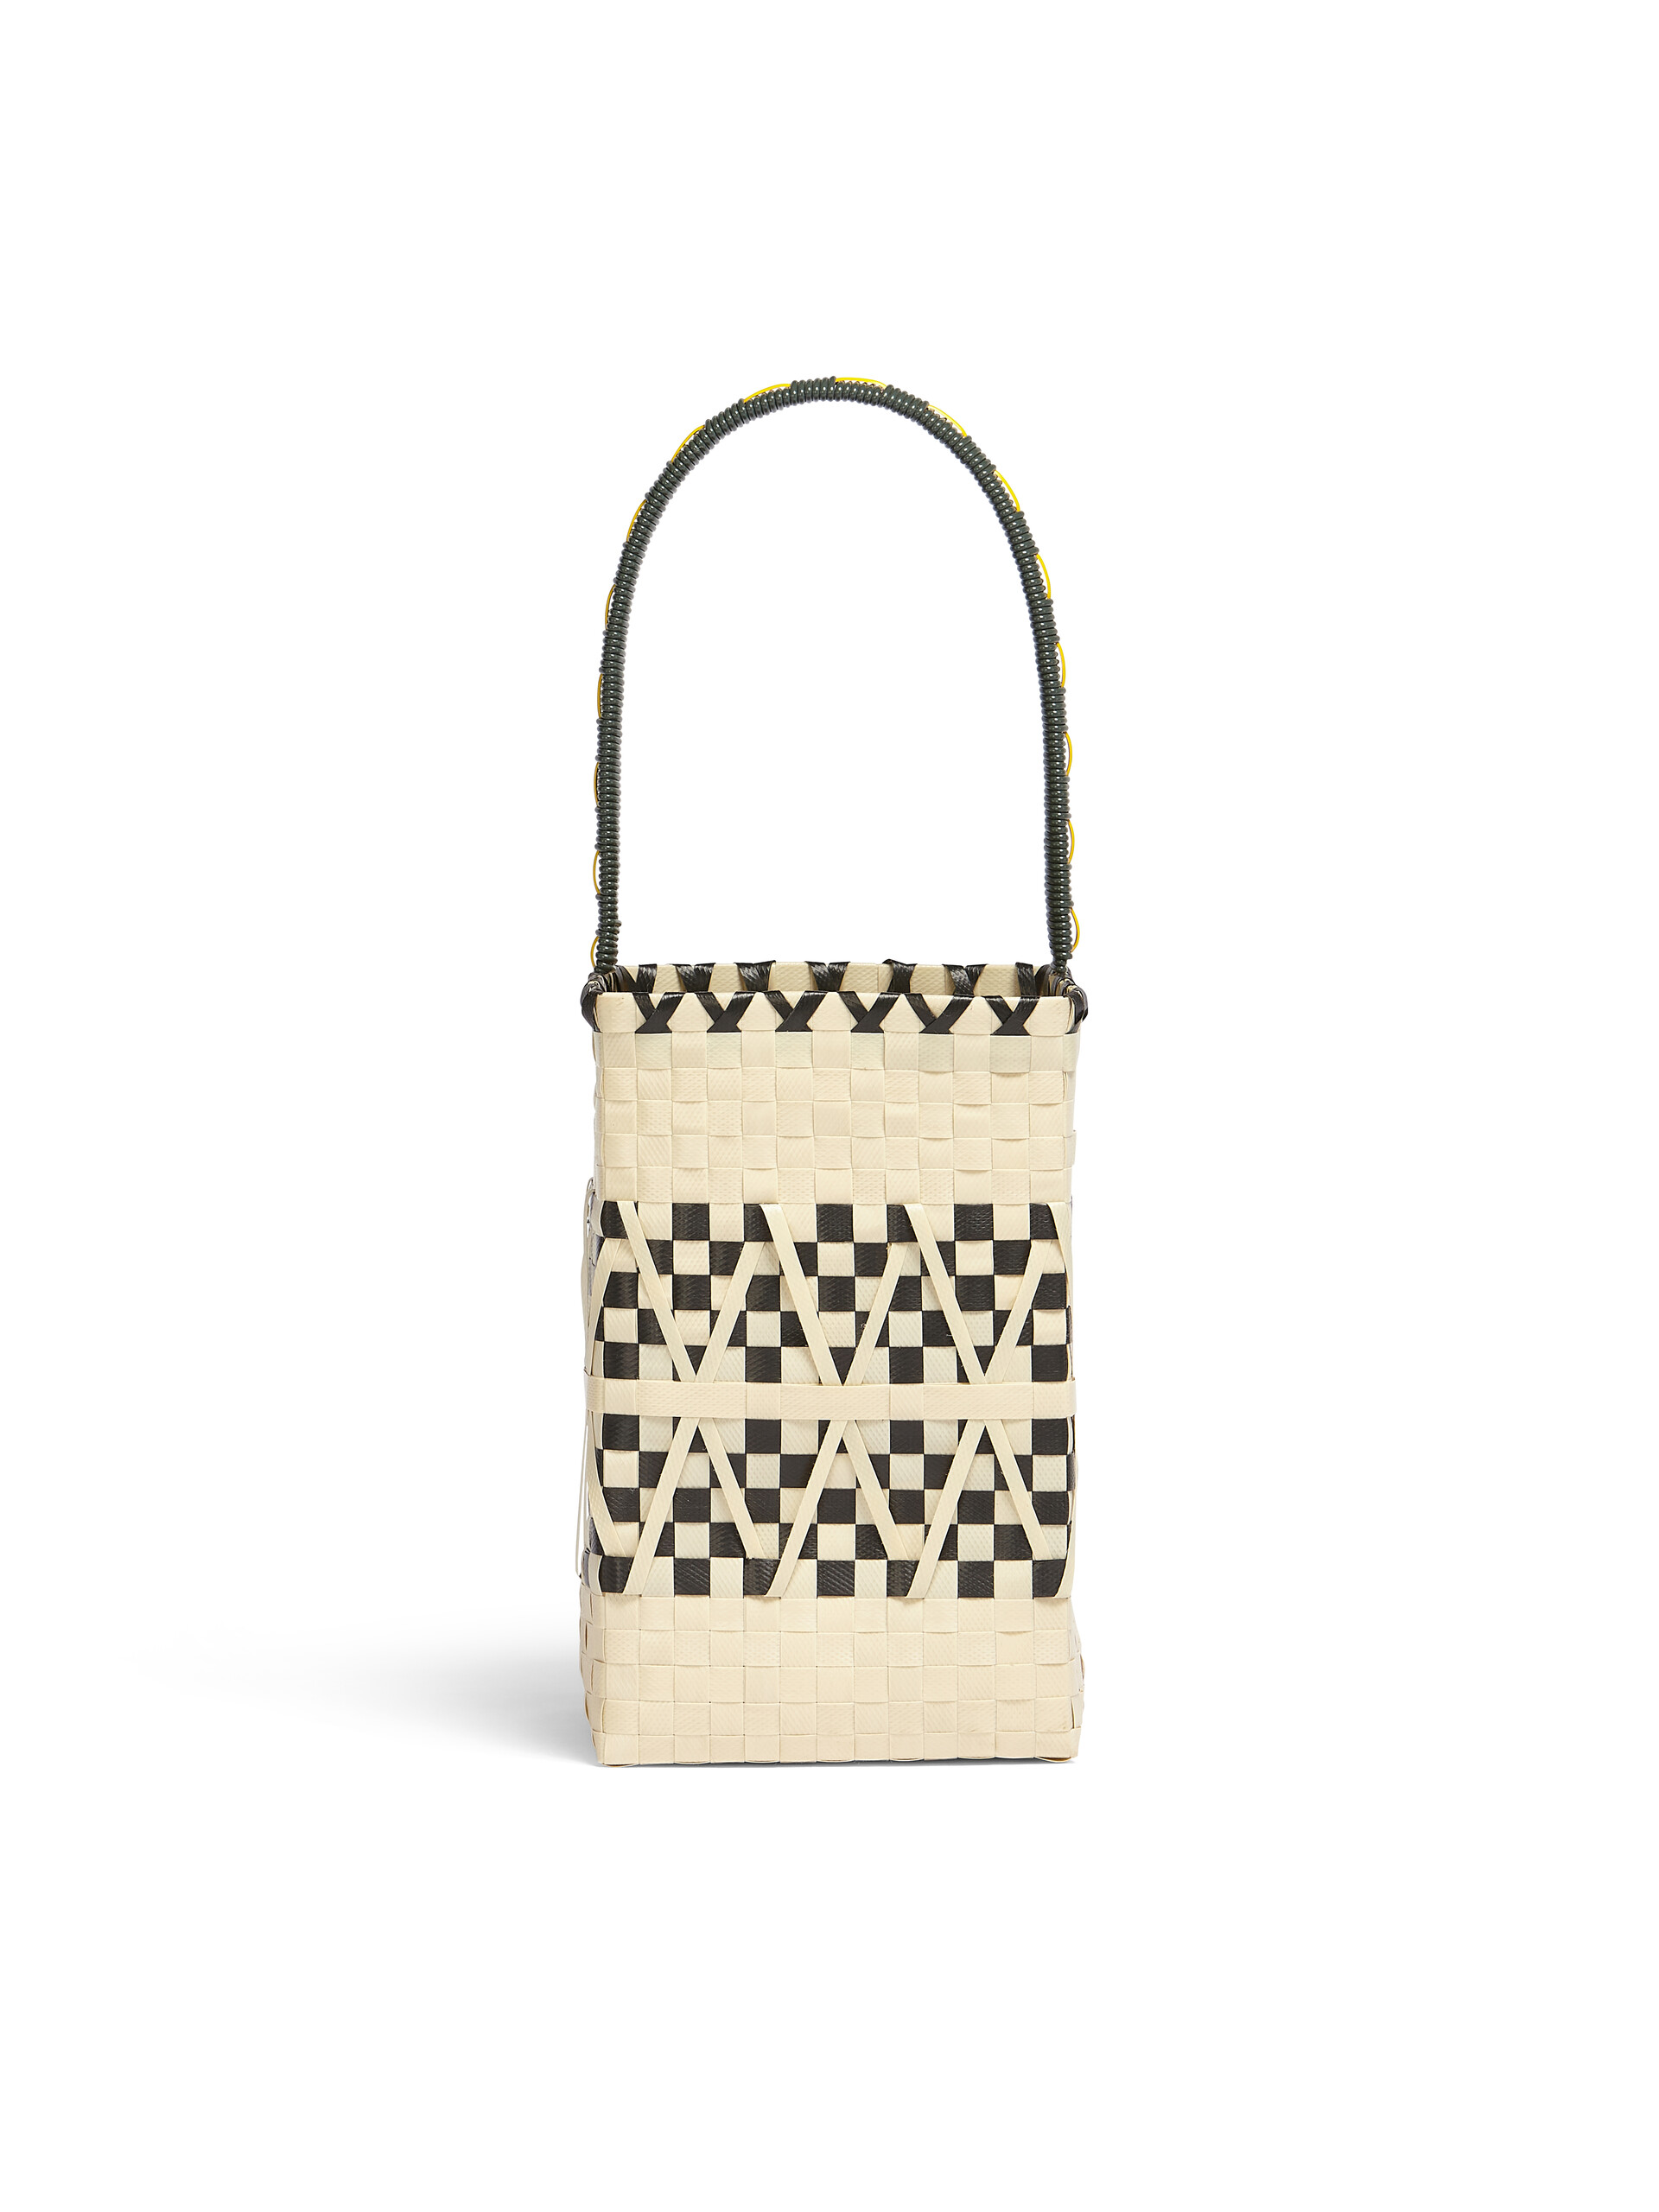 MARNI MARKET STENCIL white and black bucket bag - Shopping Bags - Image 3